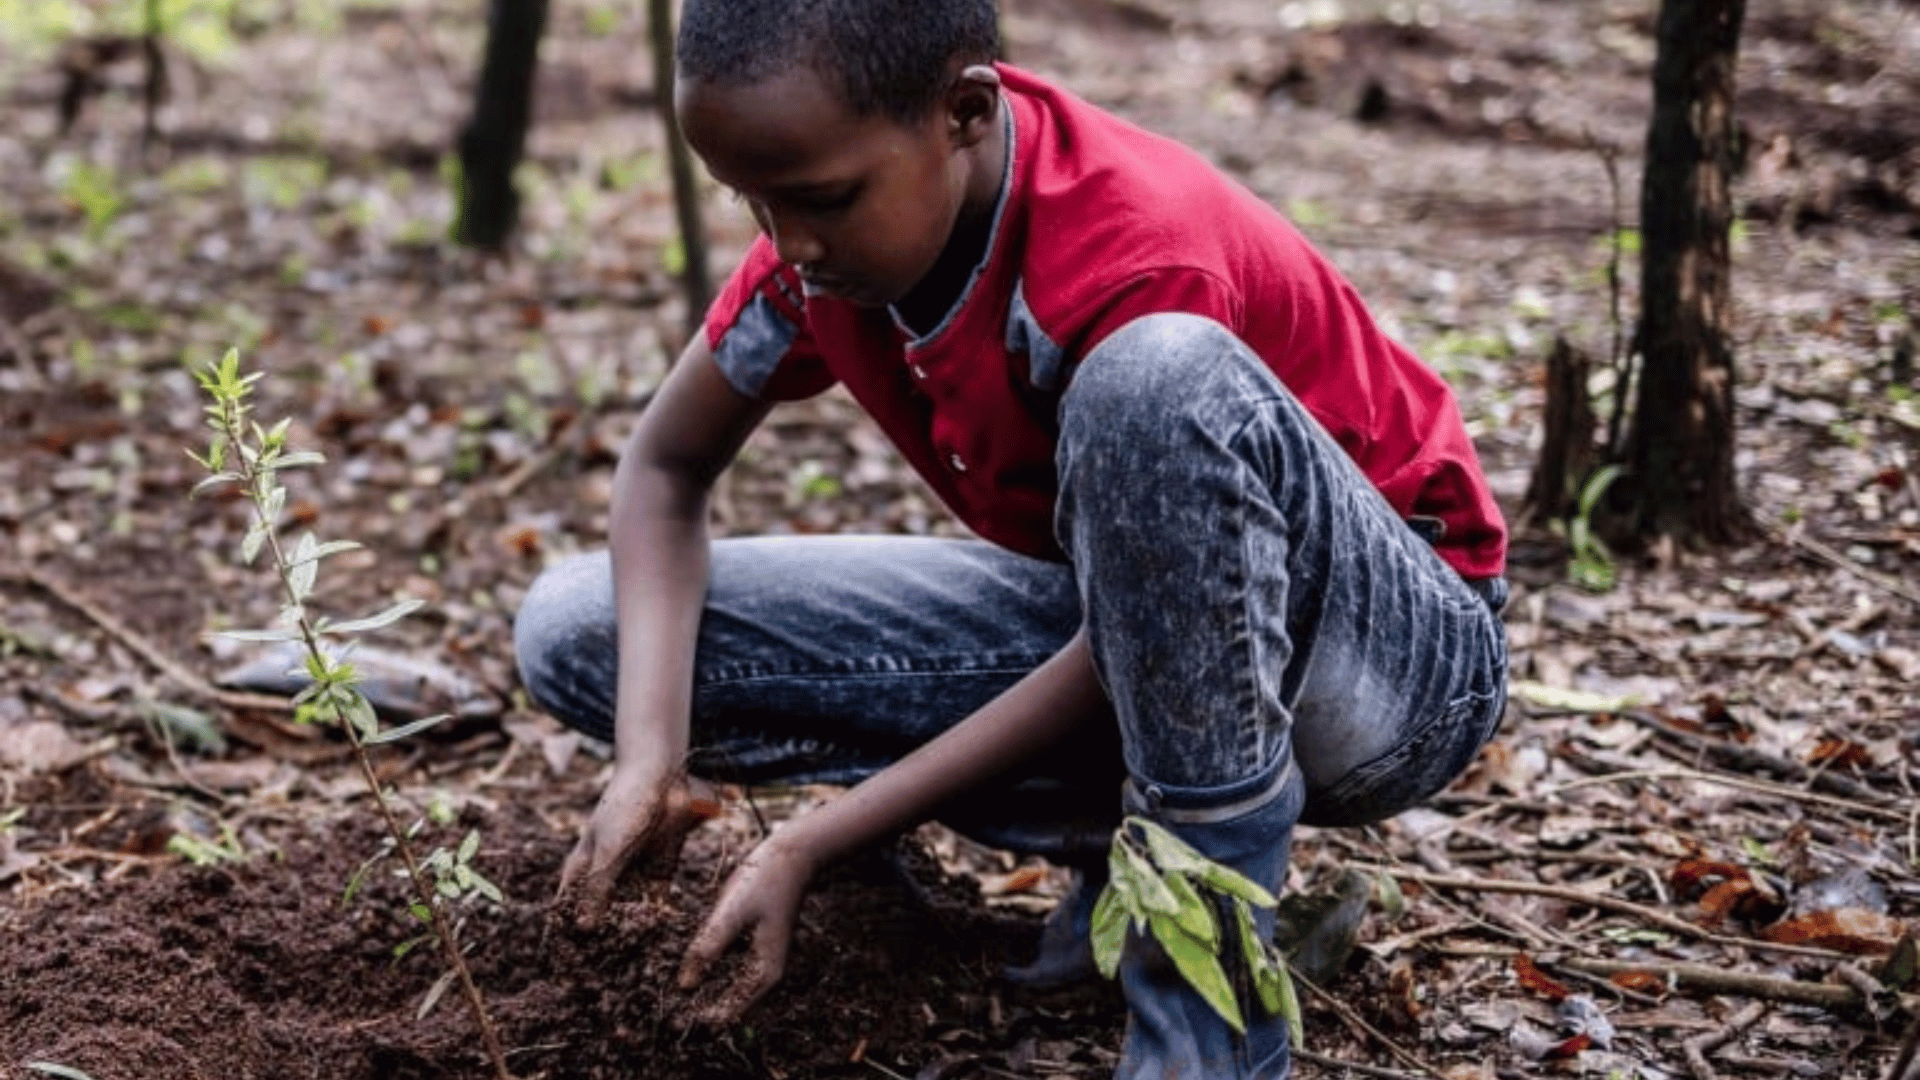 Kenya Tree-Planting Holiday Created to Plant 100 Million Seedlings